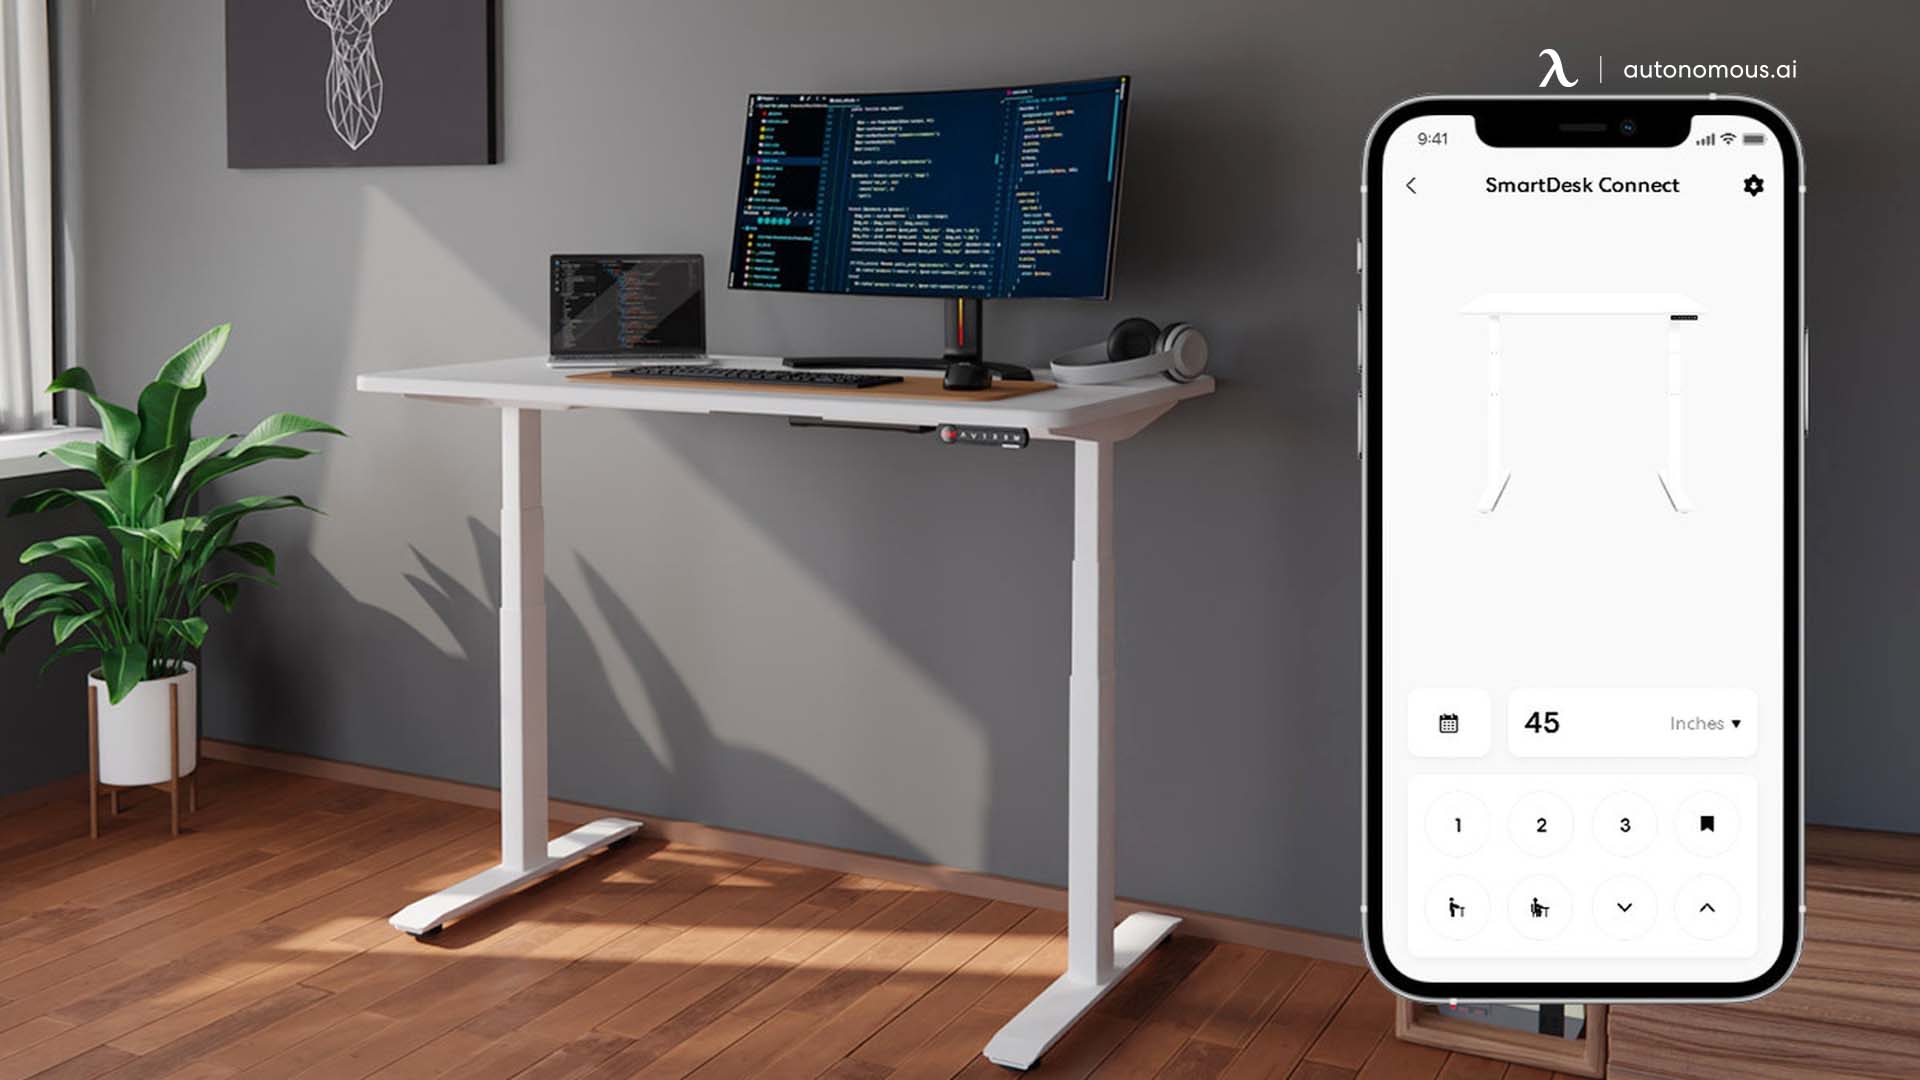 Smart Desk Connect in blue office decor